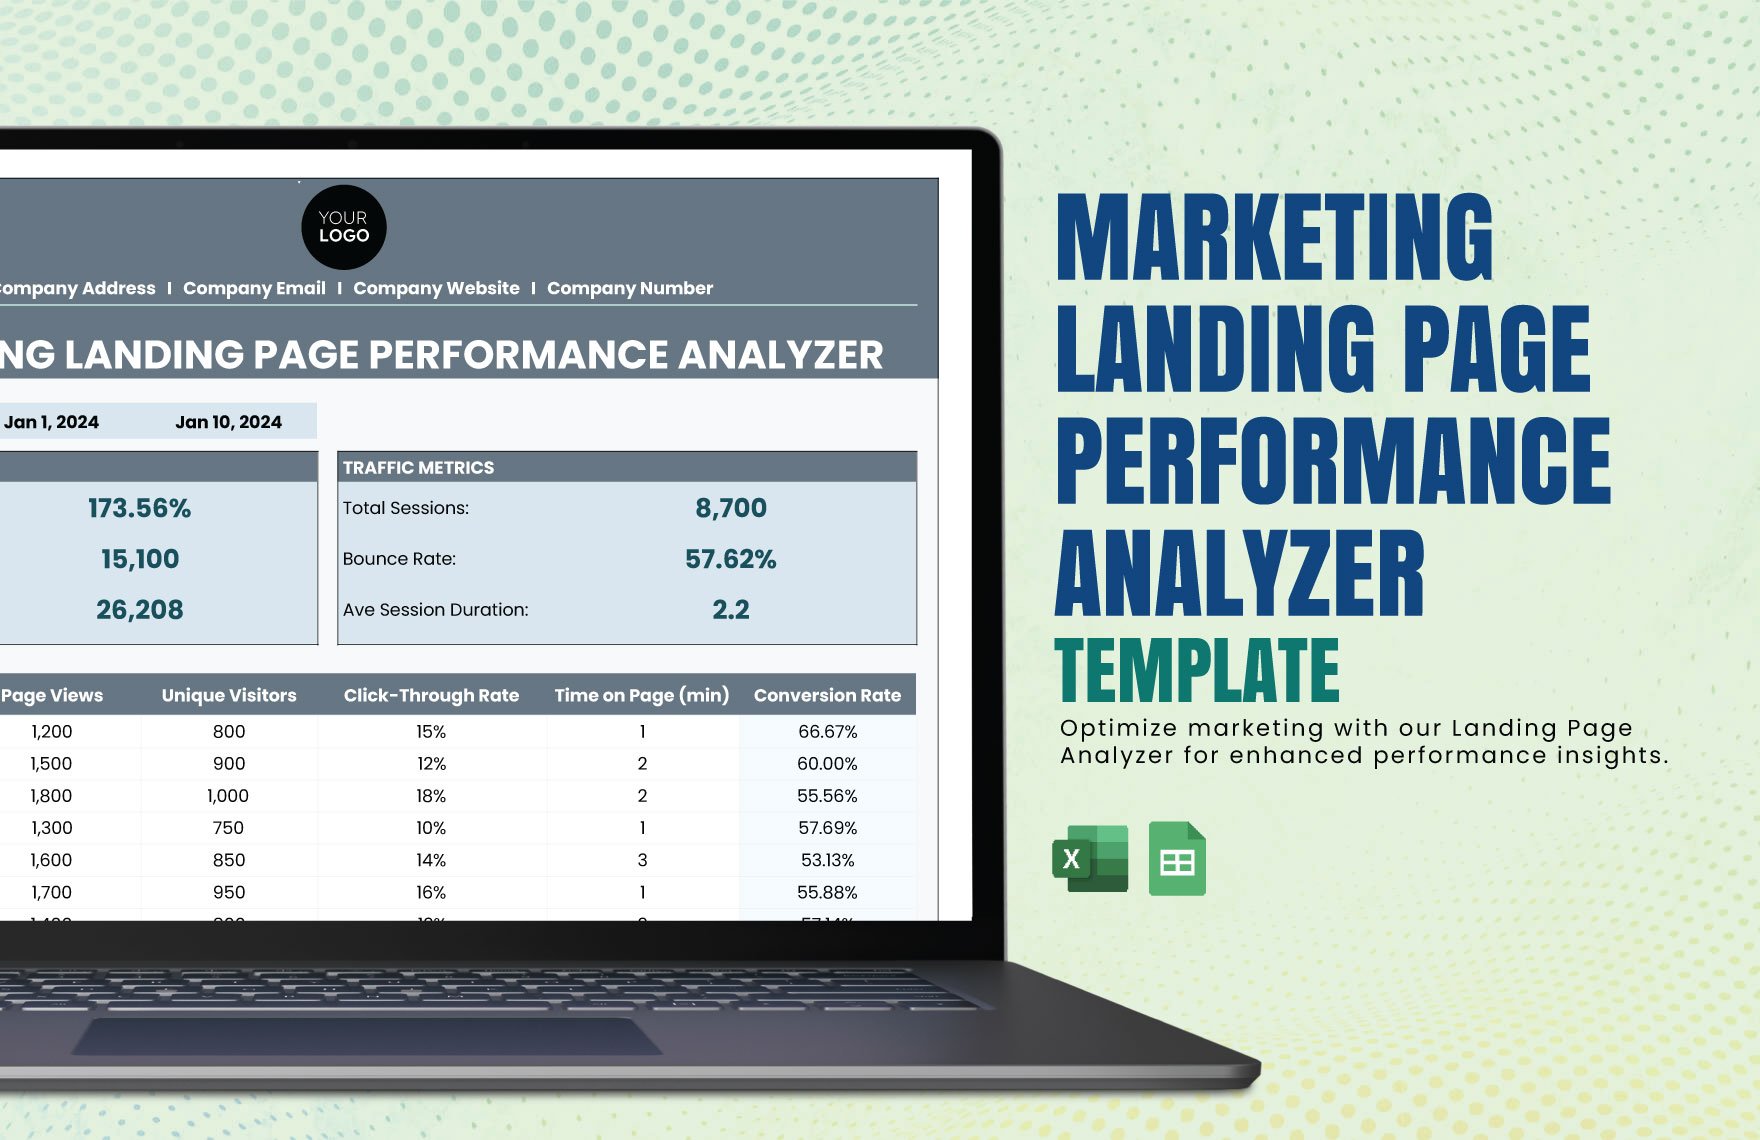 Marketing Landing Page Performance Analyzer Template